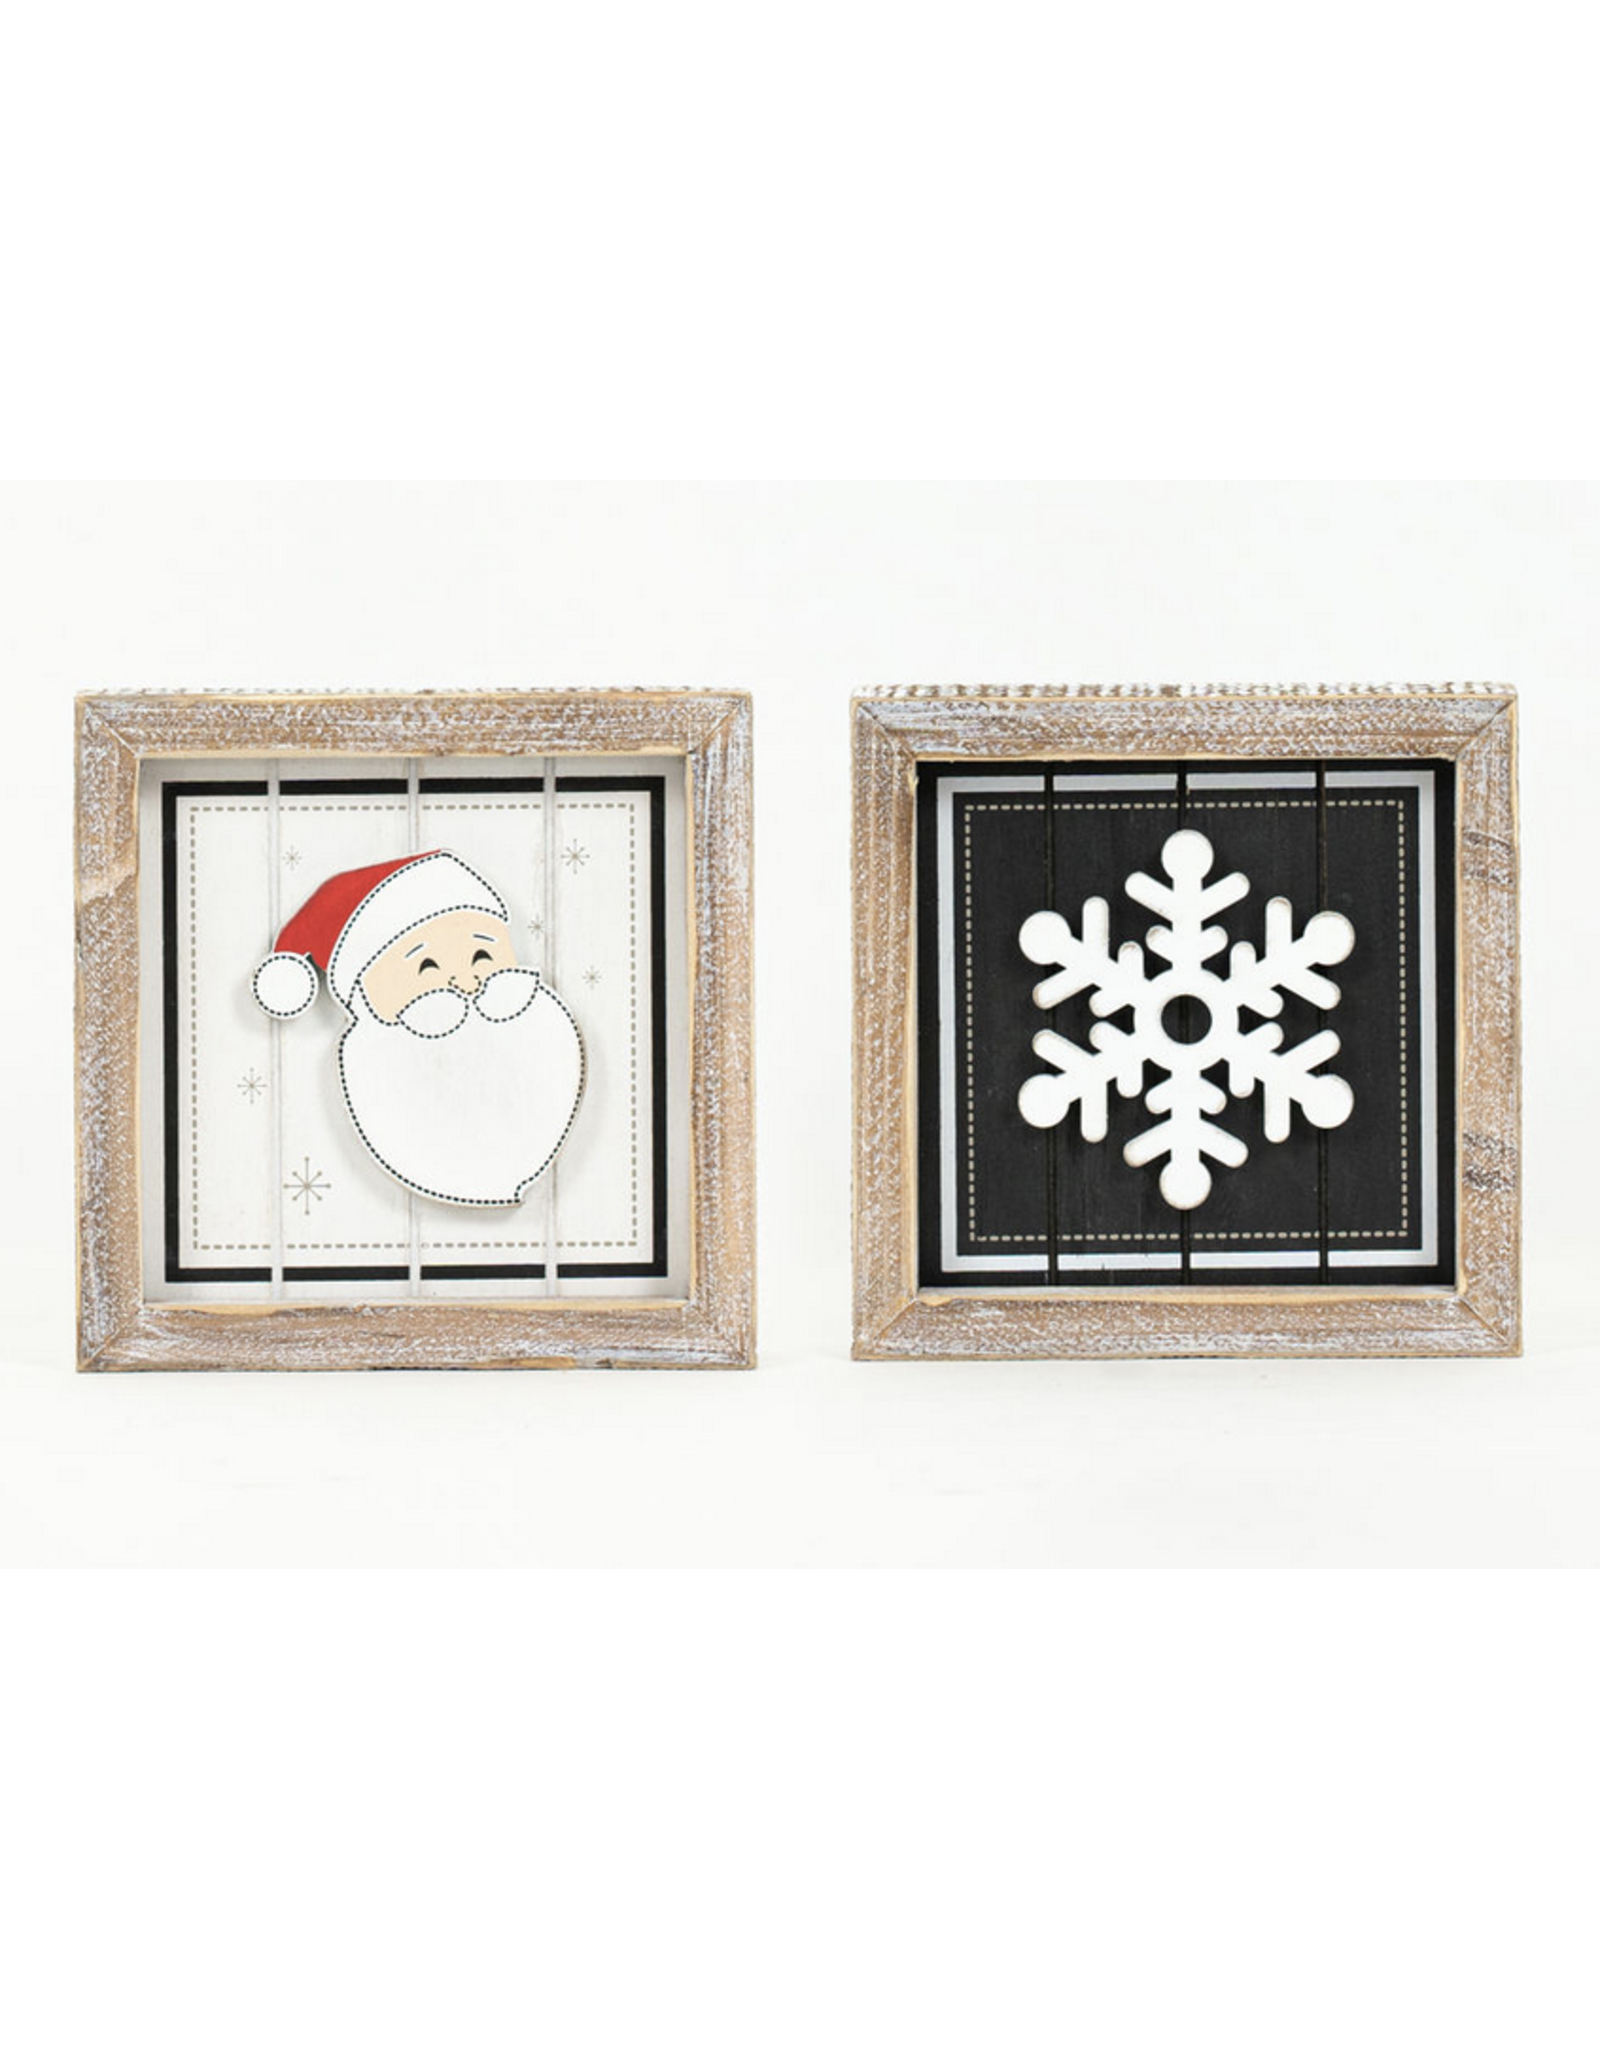 Adams & Co. Santa/Snowflake Reversible Sign 5 x 5